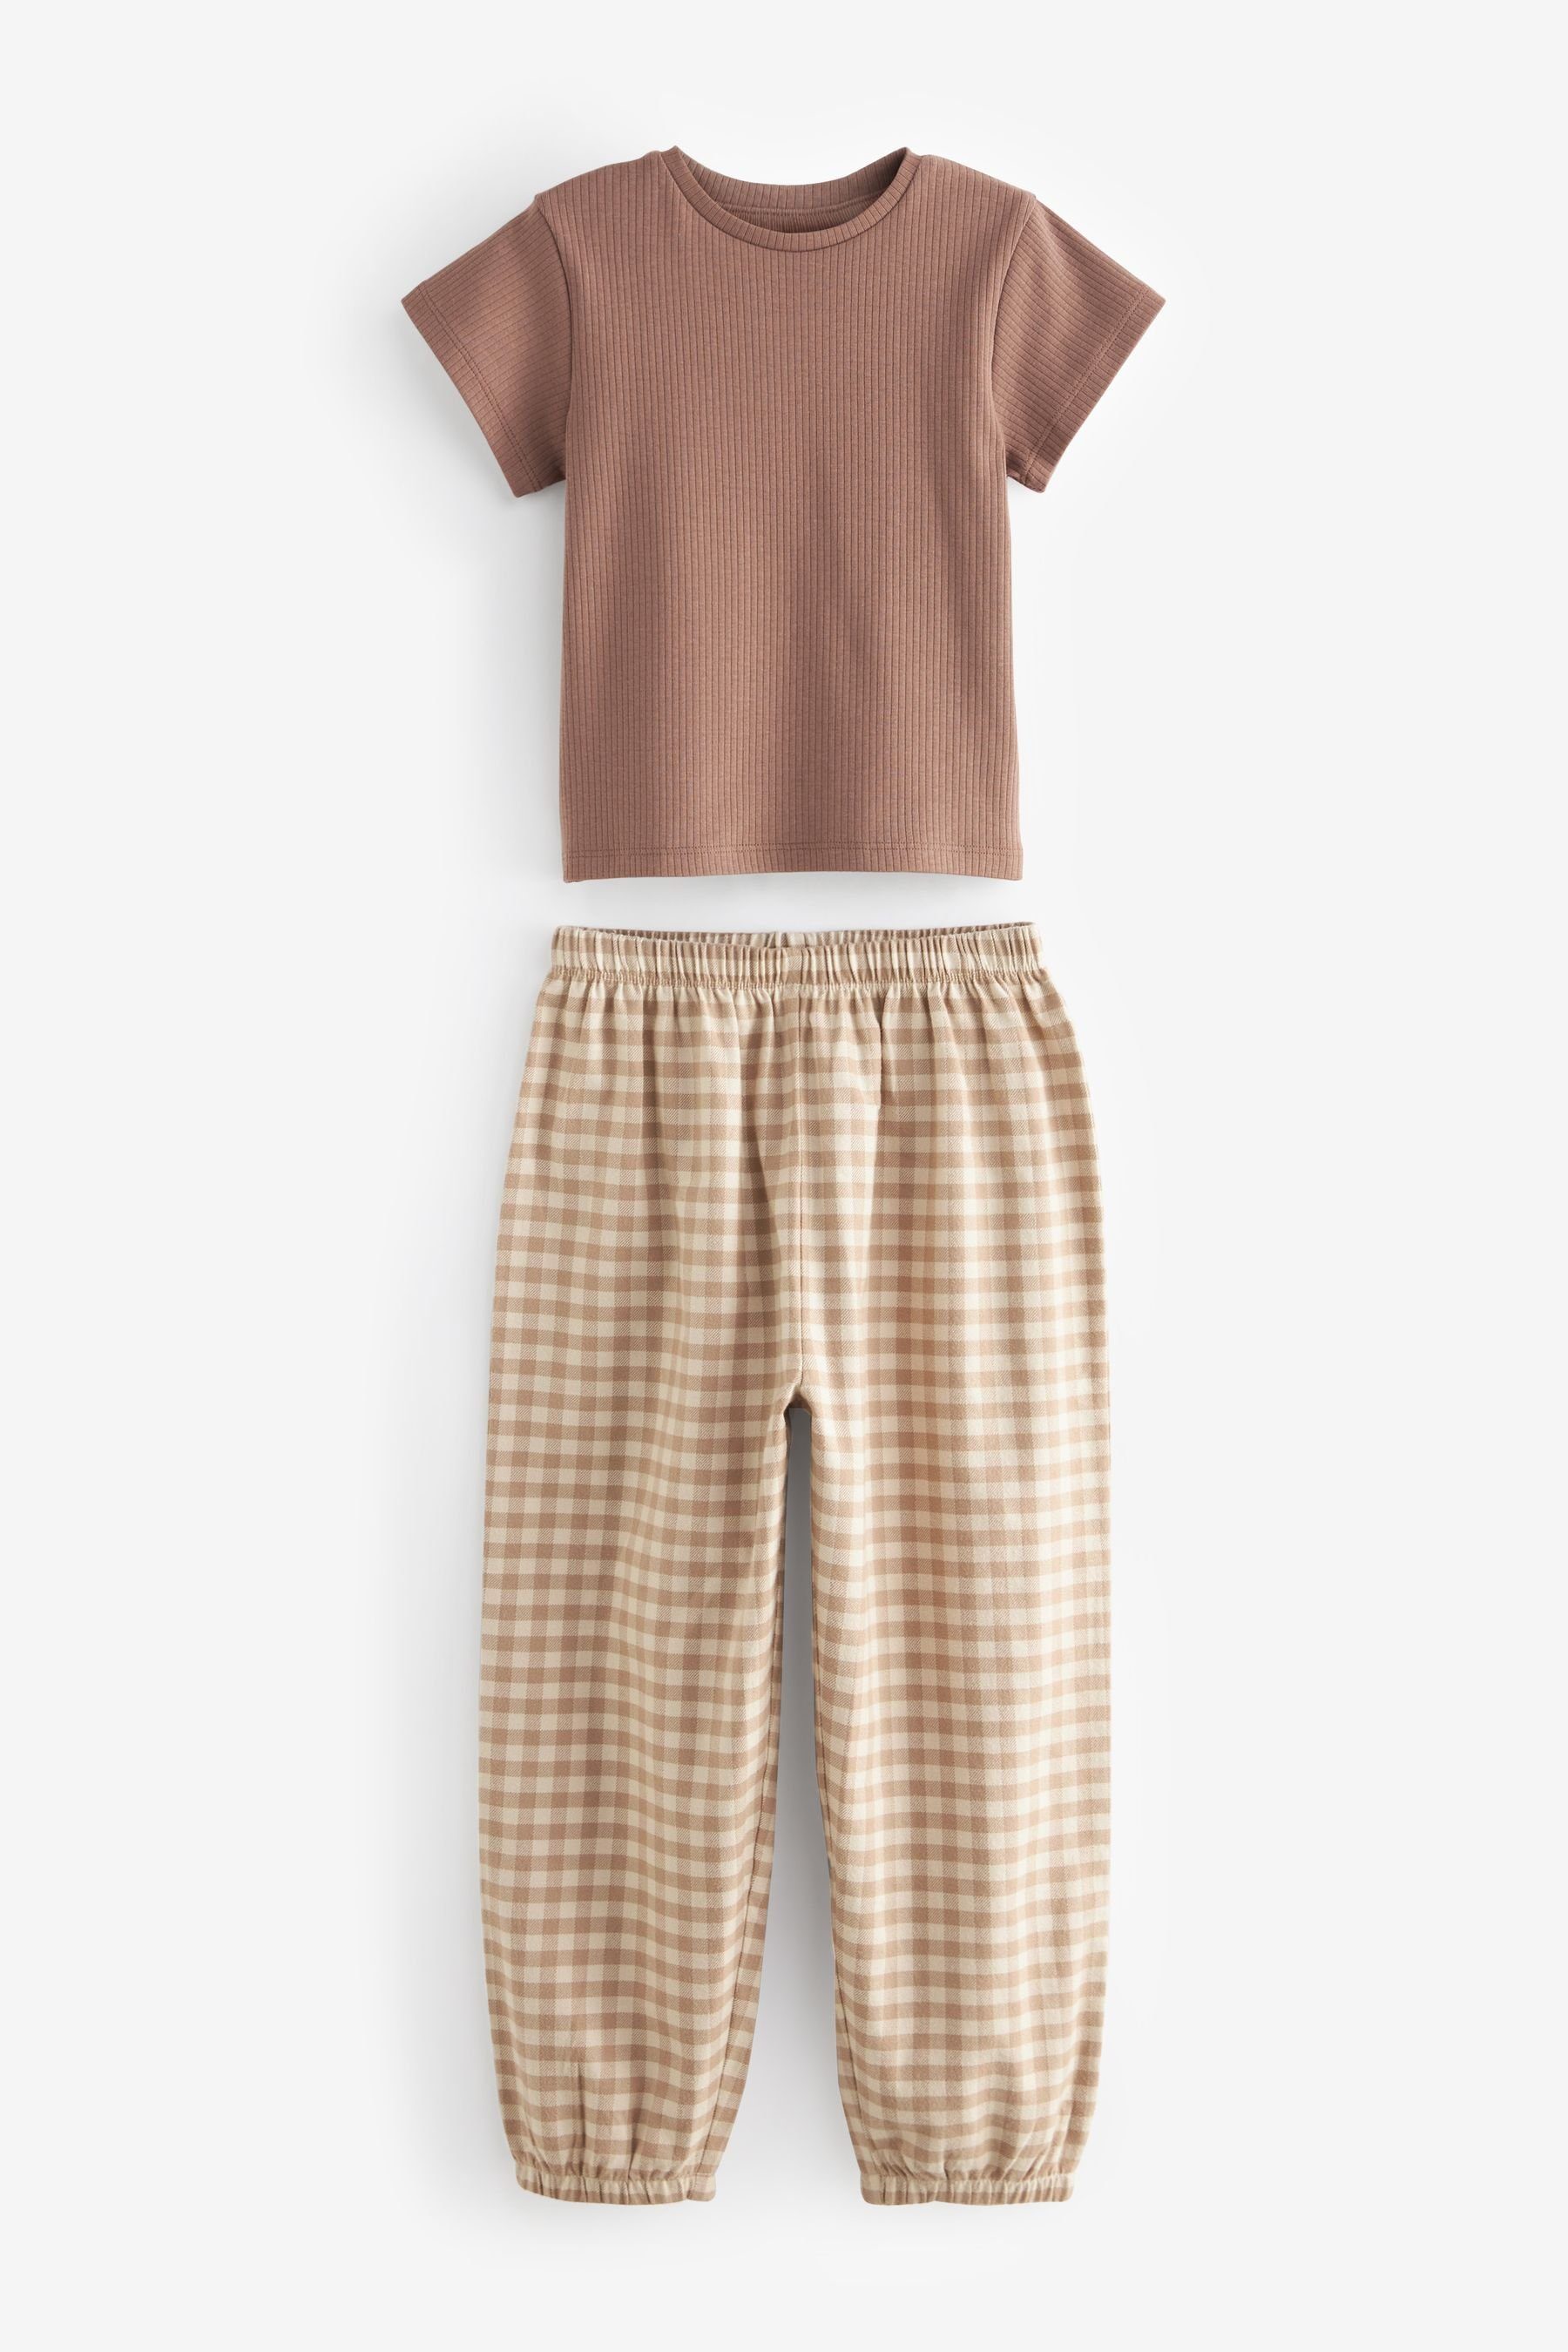 Next Pyjama Jogger Schlafanzug (2 tlg) Brown/Cream Gingham